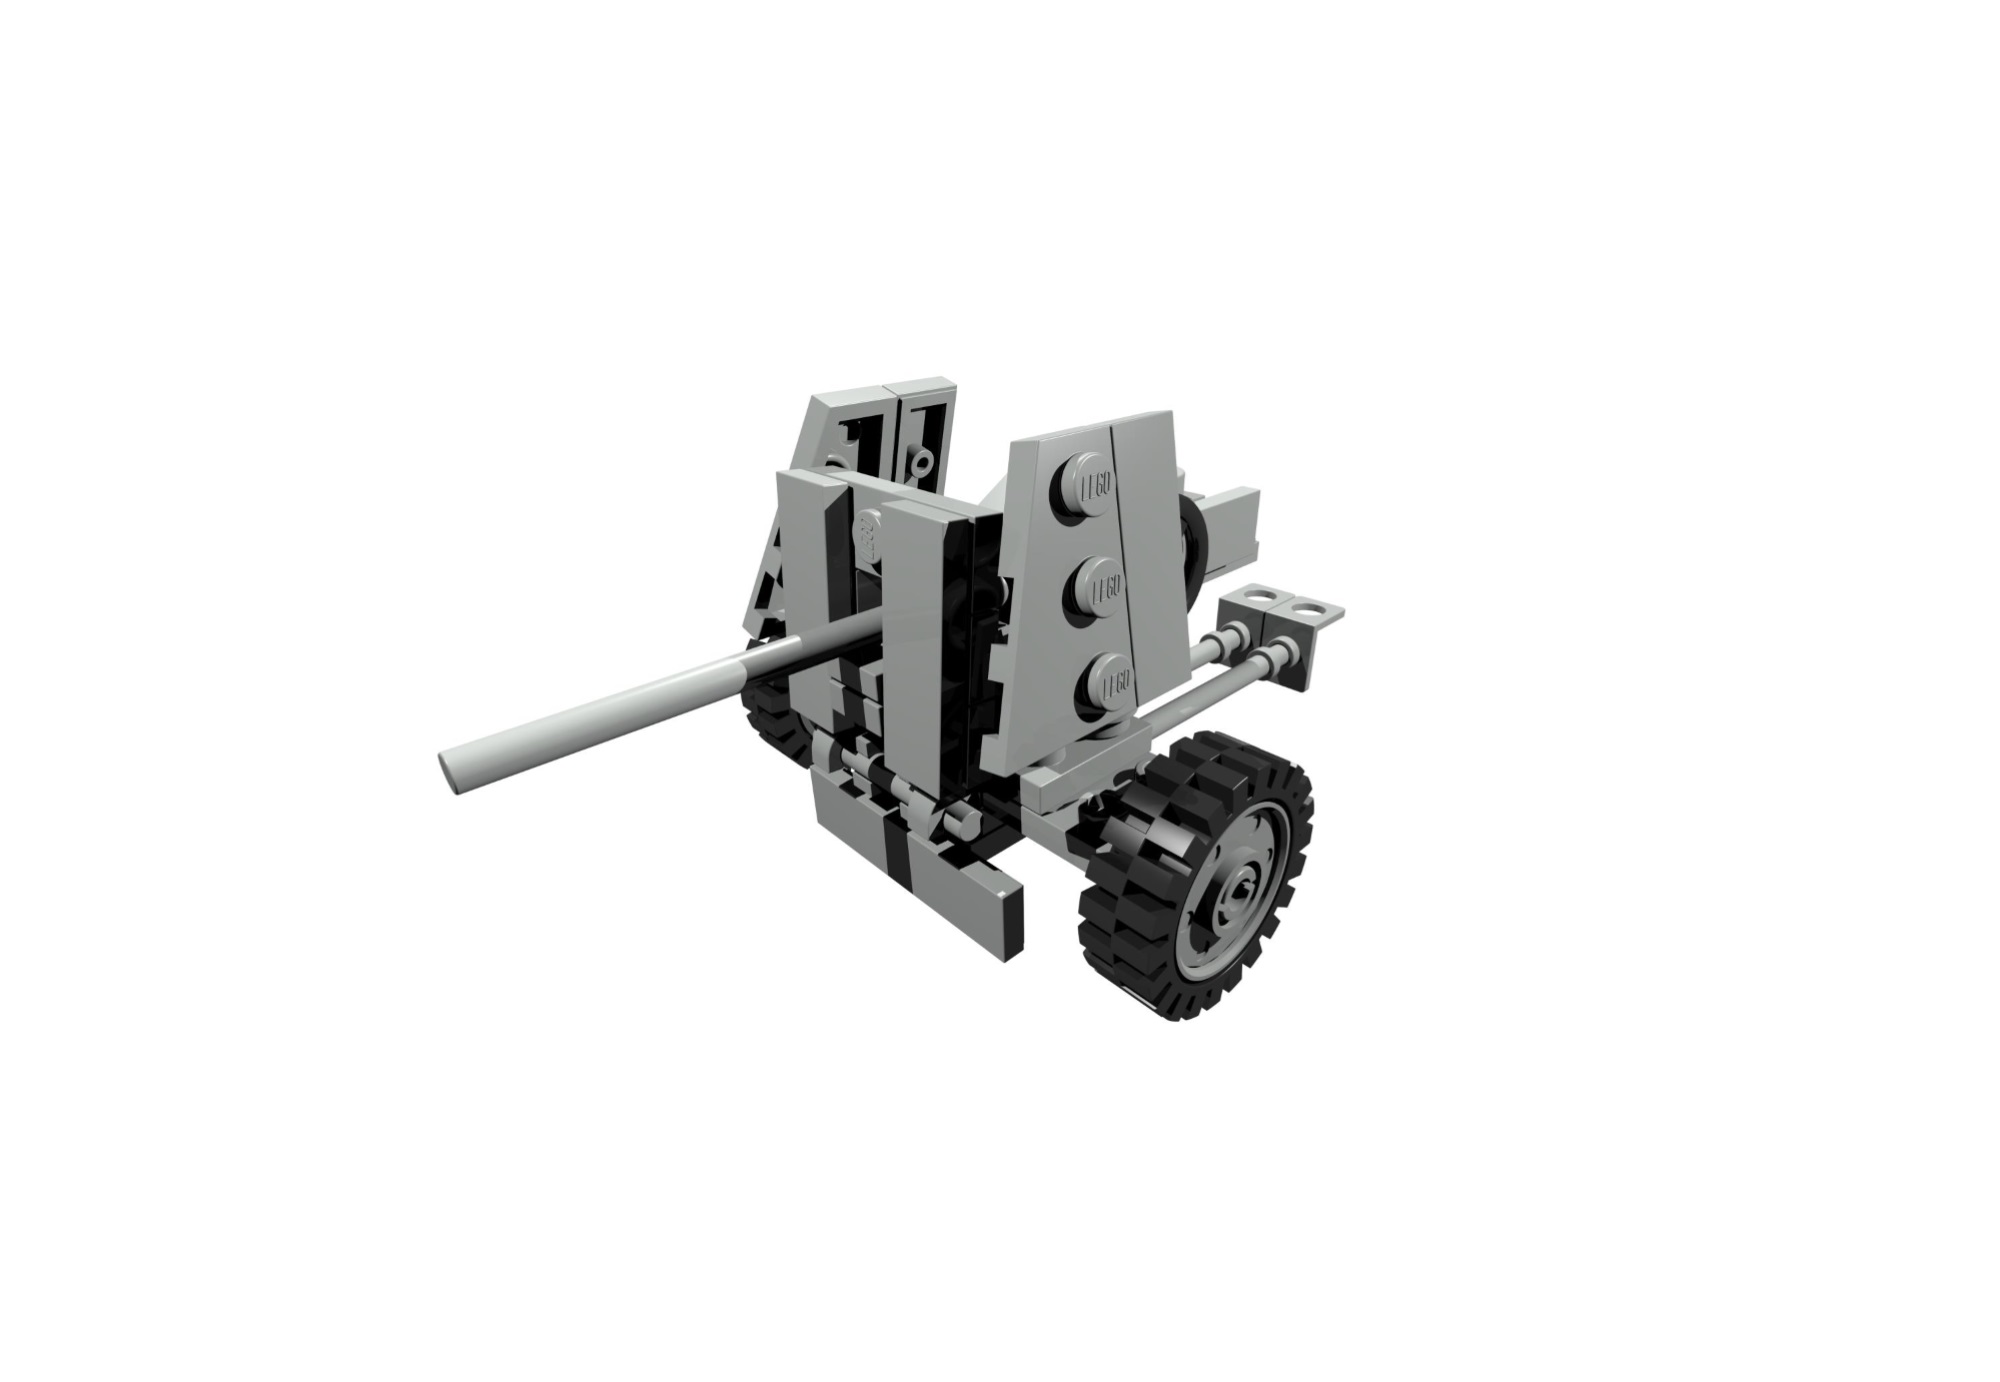 LEGO© WW2 ドイツ軍3.7 cm PaK 36対戦車砲 – brick-education.com